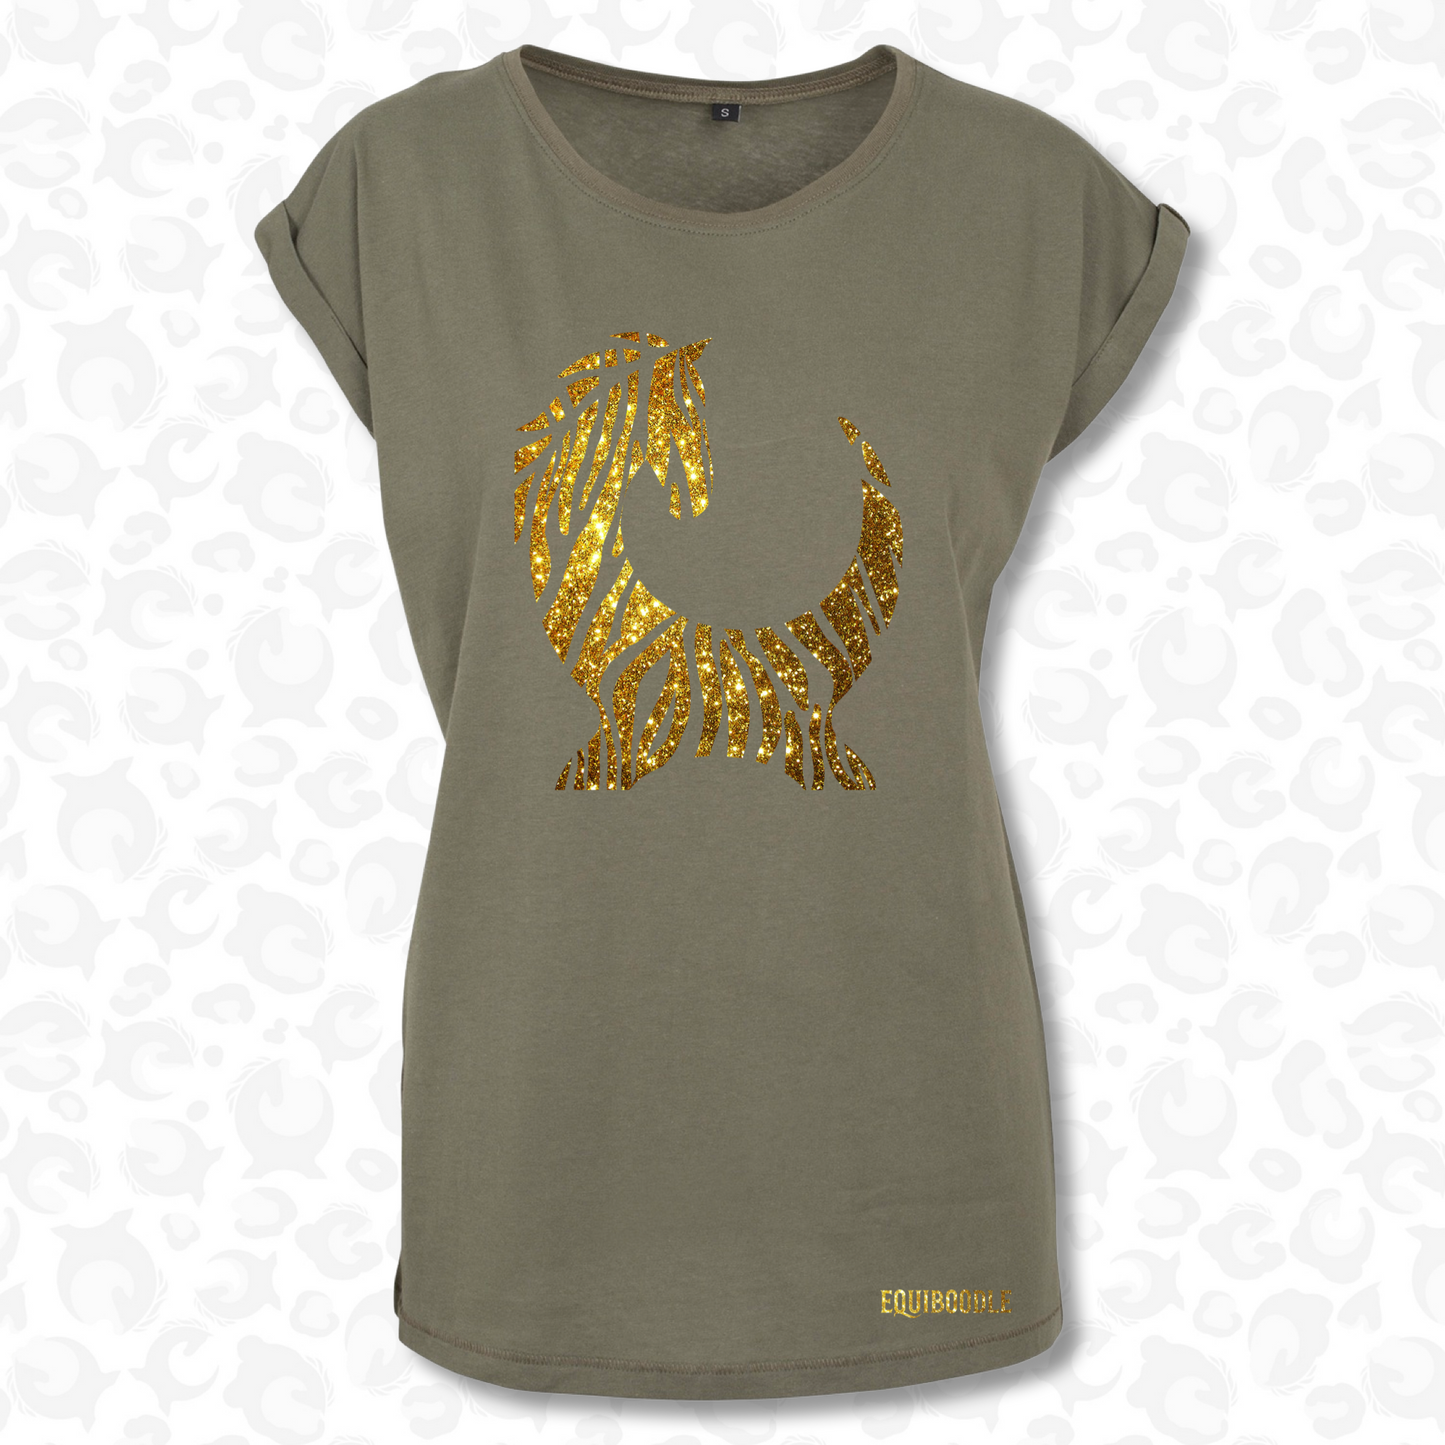 Equiboodle Hotshot T Shirt - Zebra Khaki/Gold Sparkle OFFER!